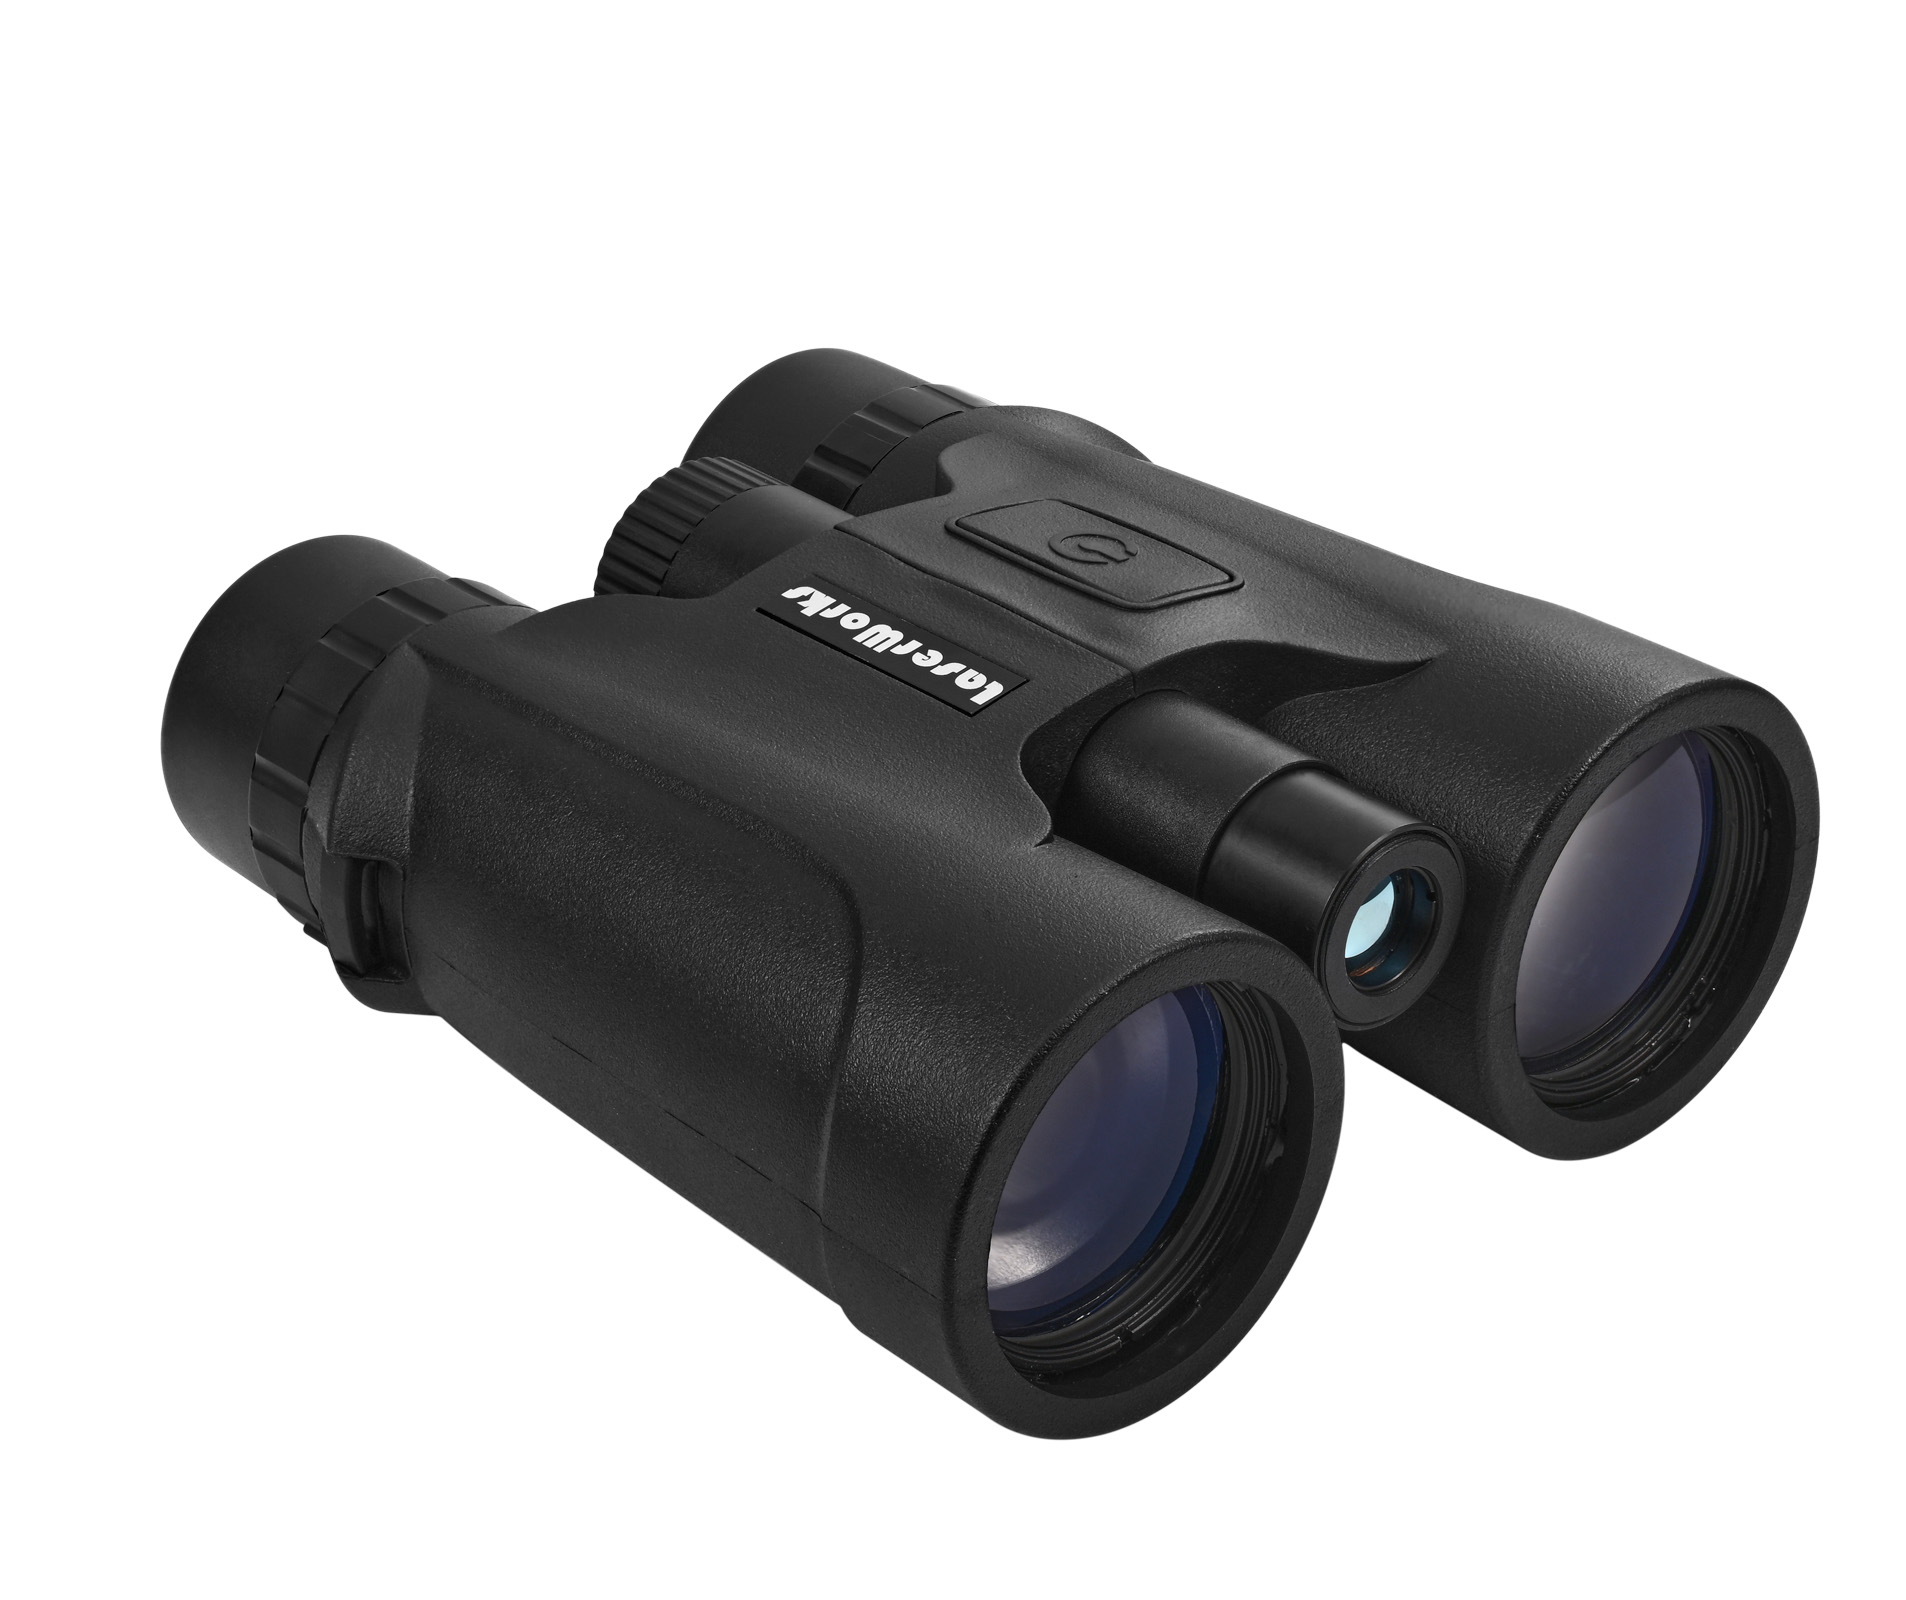 10x42 Binoculars rangefinder for Hunting